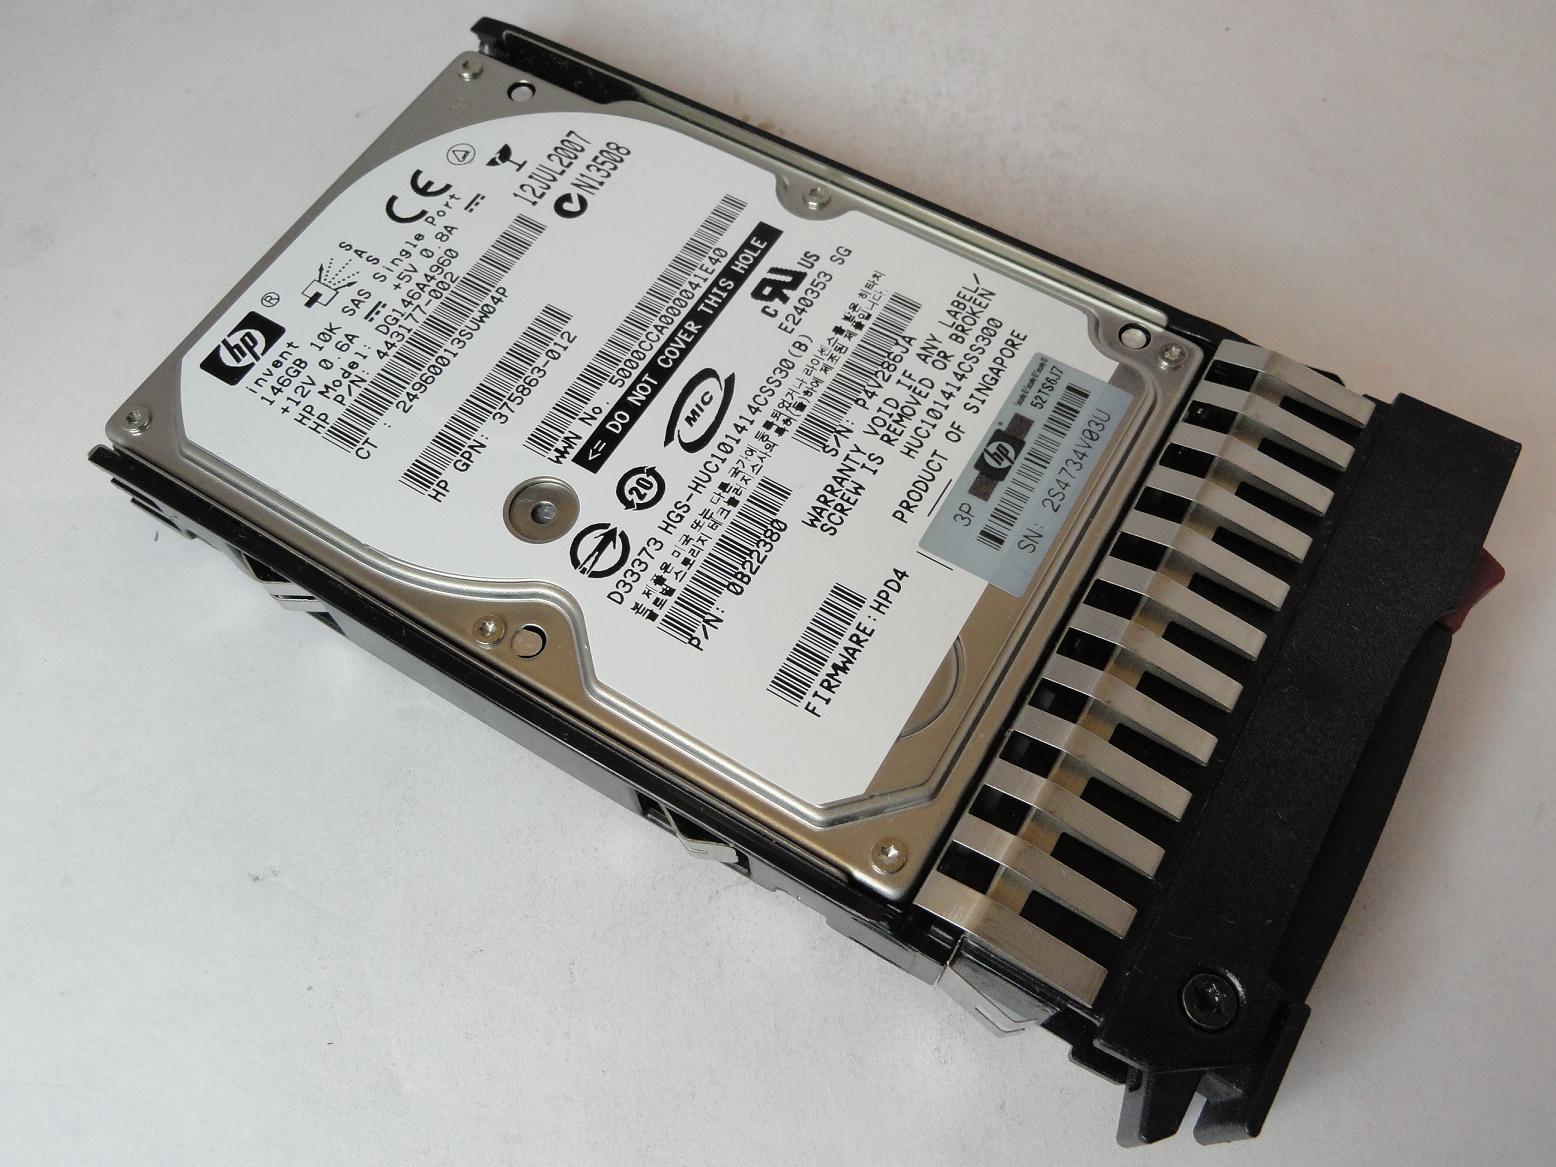 0B22380 - Hitachi HP 146GB SAS 10Krpm 2.5in HDD in Caddy - USED